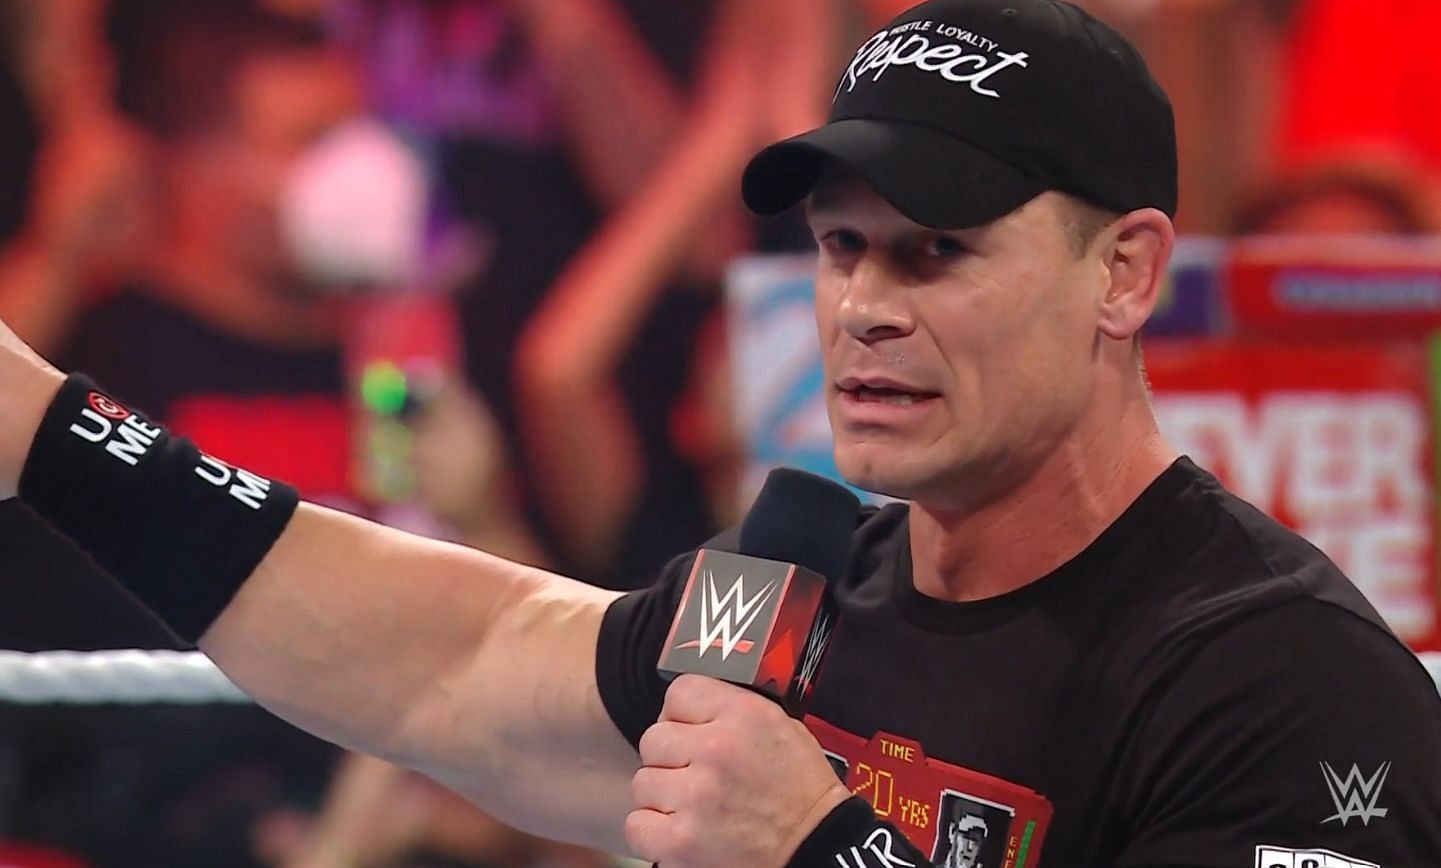 John Cena is celebrating 20 years in WWE